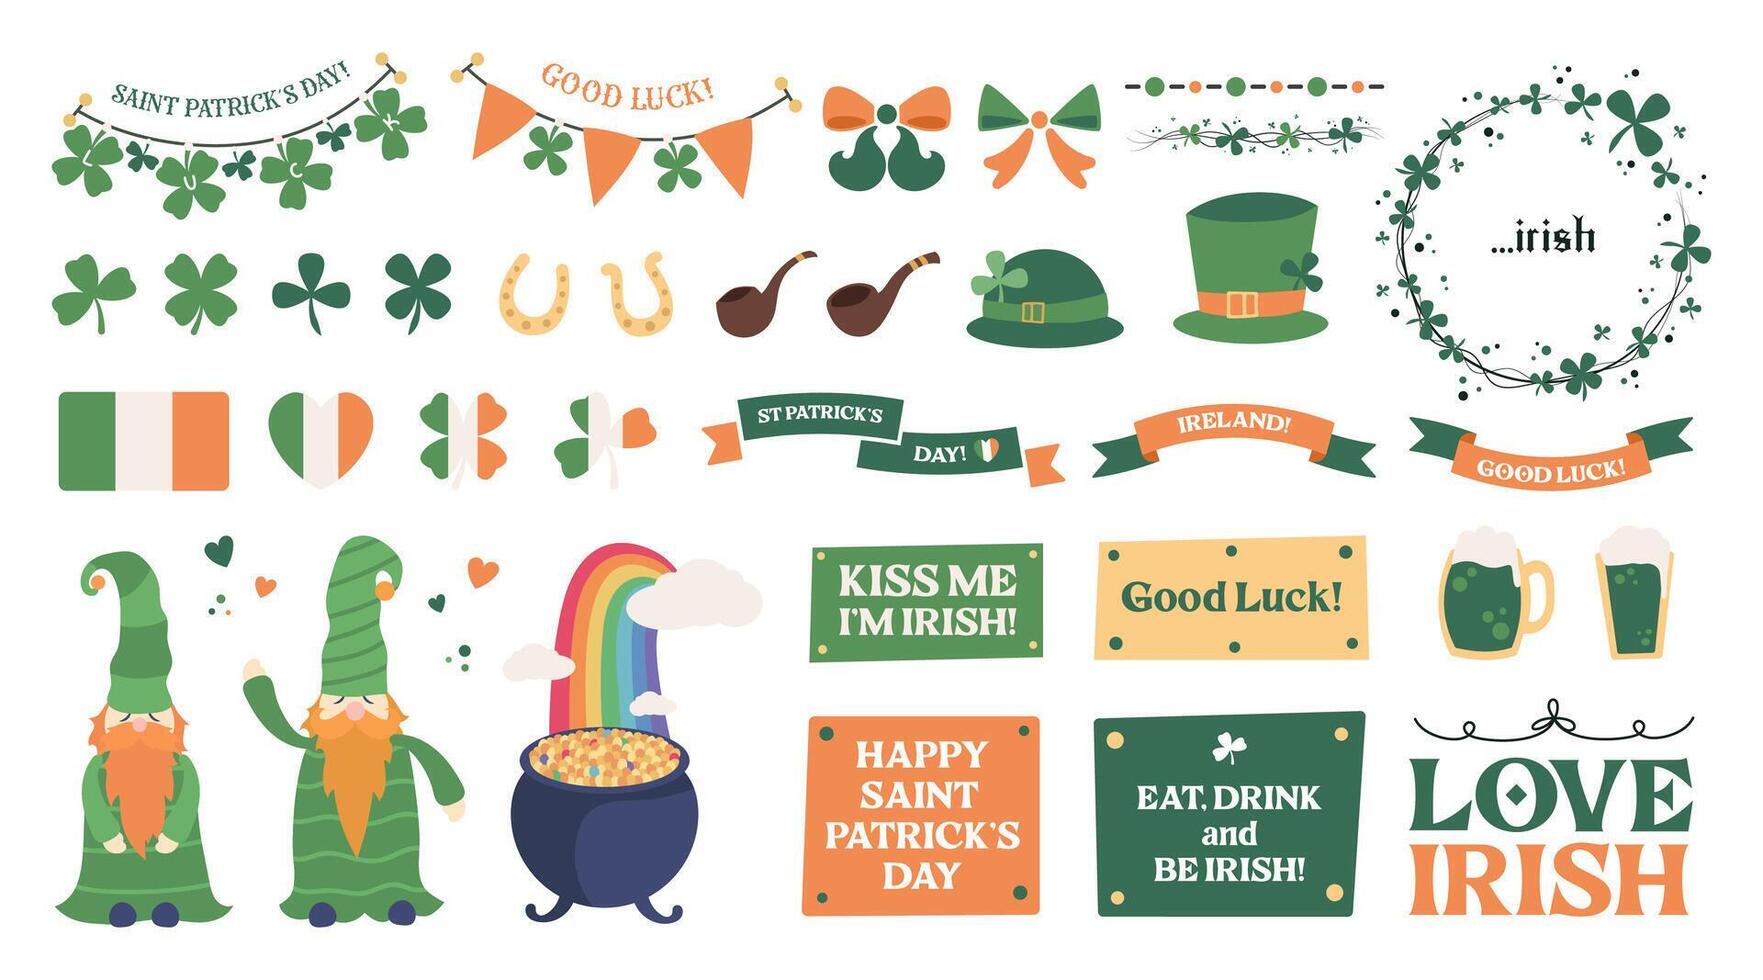 Saint Patrick's Day sticker set, Irish holiday design elements with Irish flags, symbols, green beer, hats, clover frame, horseshoe, smoking pipes and leprechaun gold. Vector illustration.